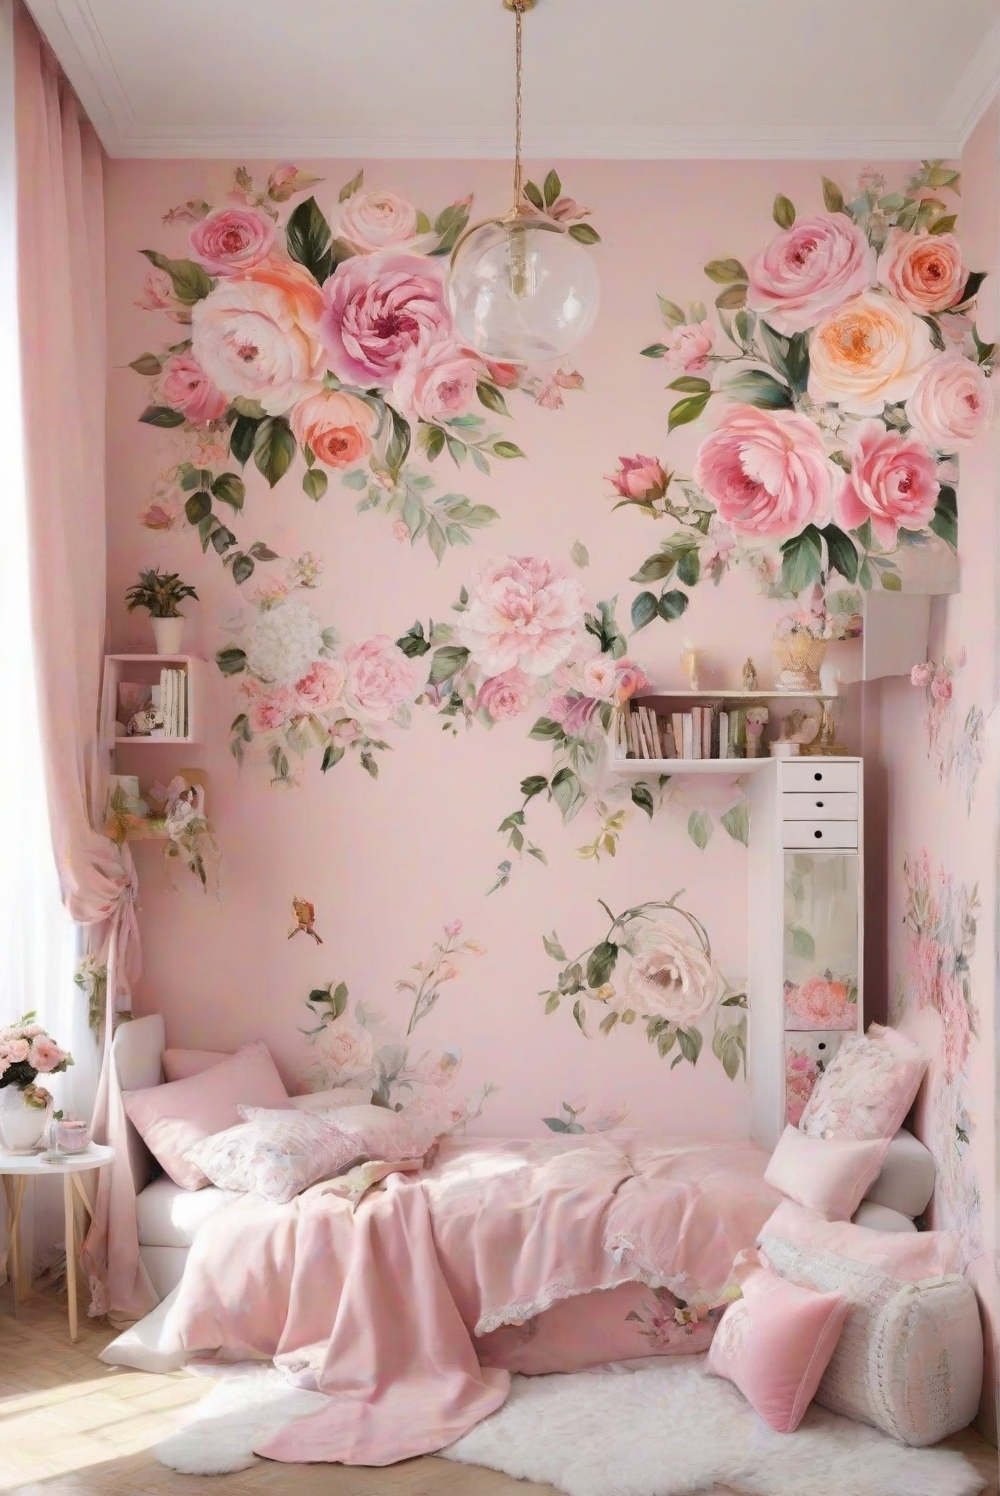 floral wallpaper, girly bedroom decor, feminine home design, chic apartment decor, stylish interior design, trendy floral patterns, modern apartment decoration